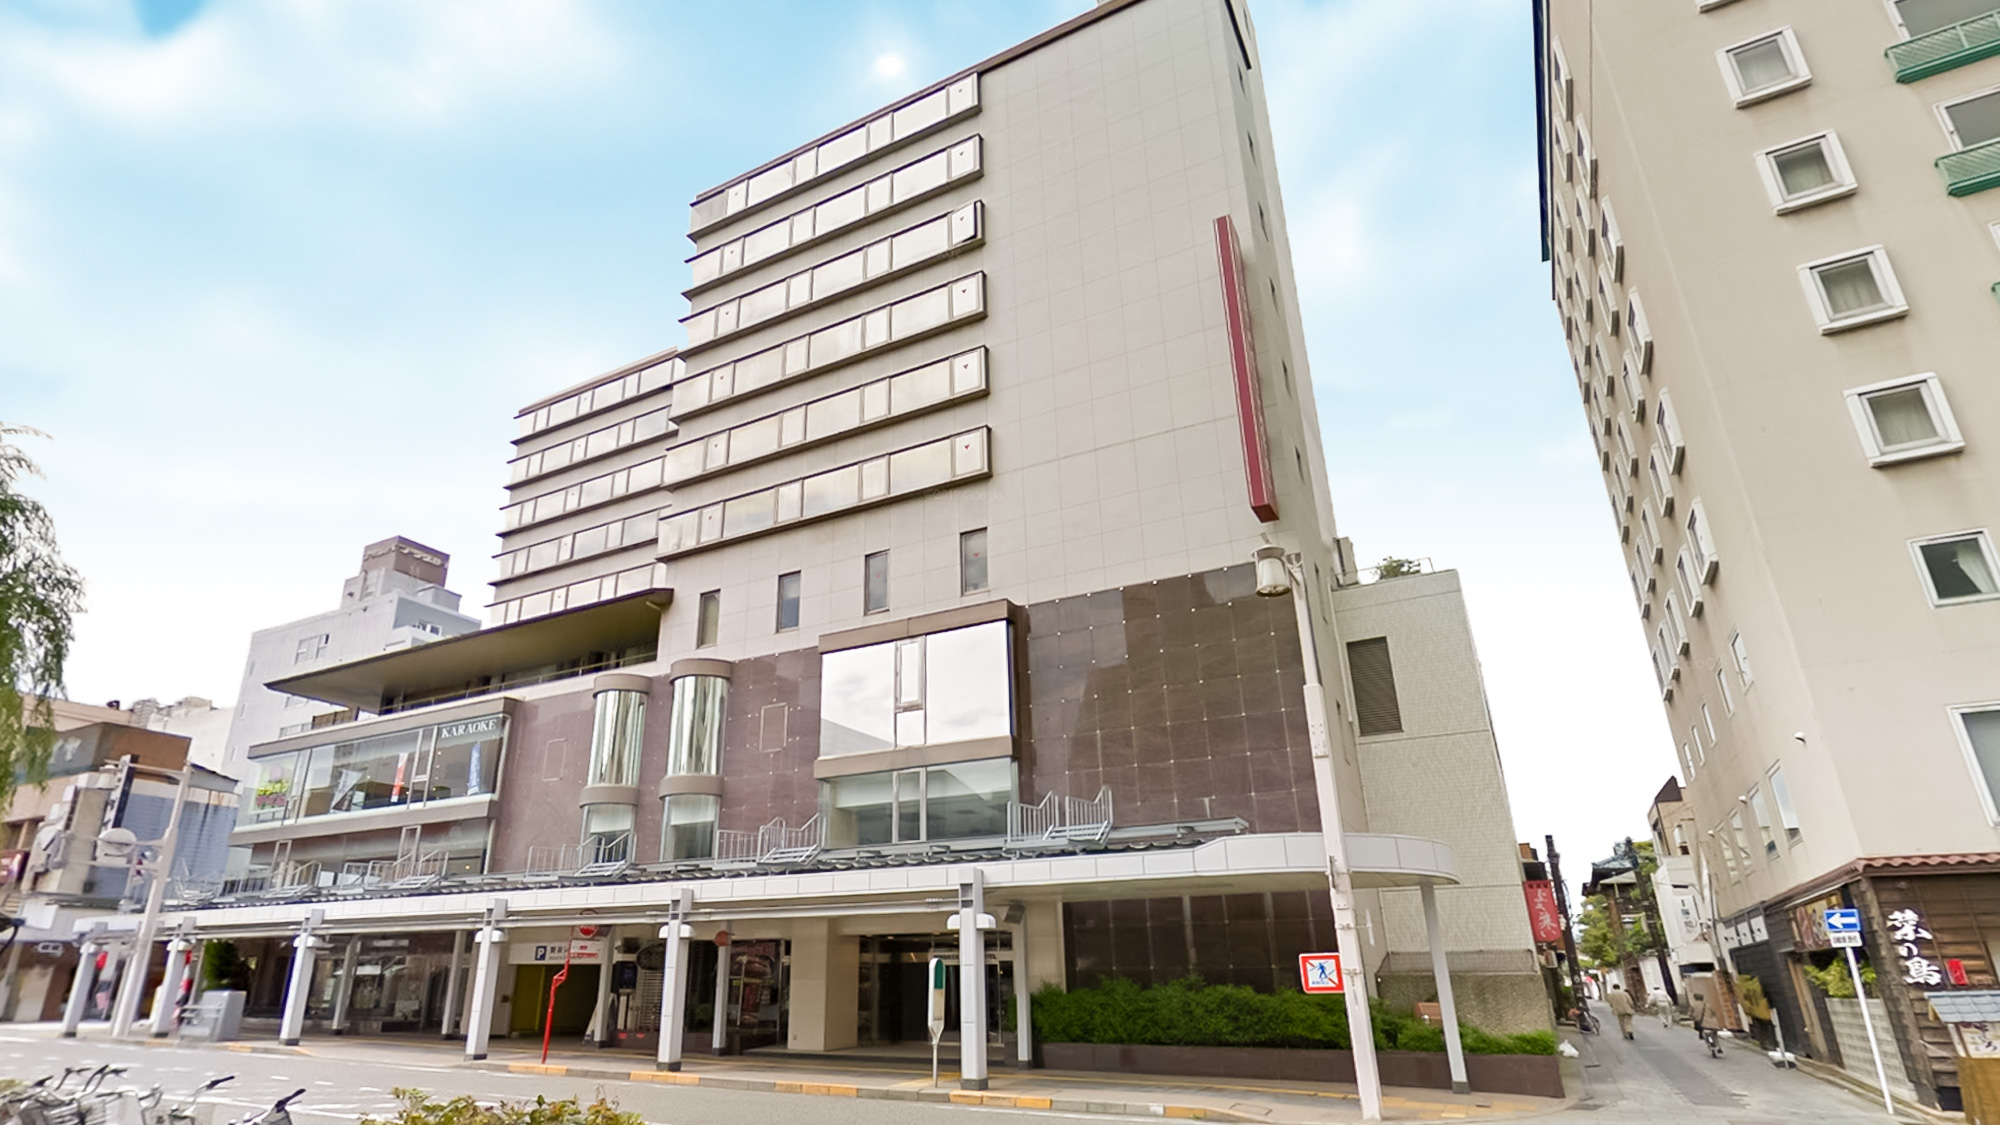 Niigata City Hotel Furumachidori (BBH Hotel Group)